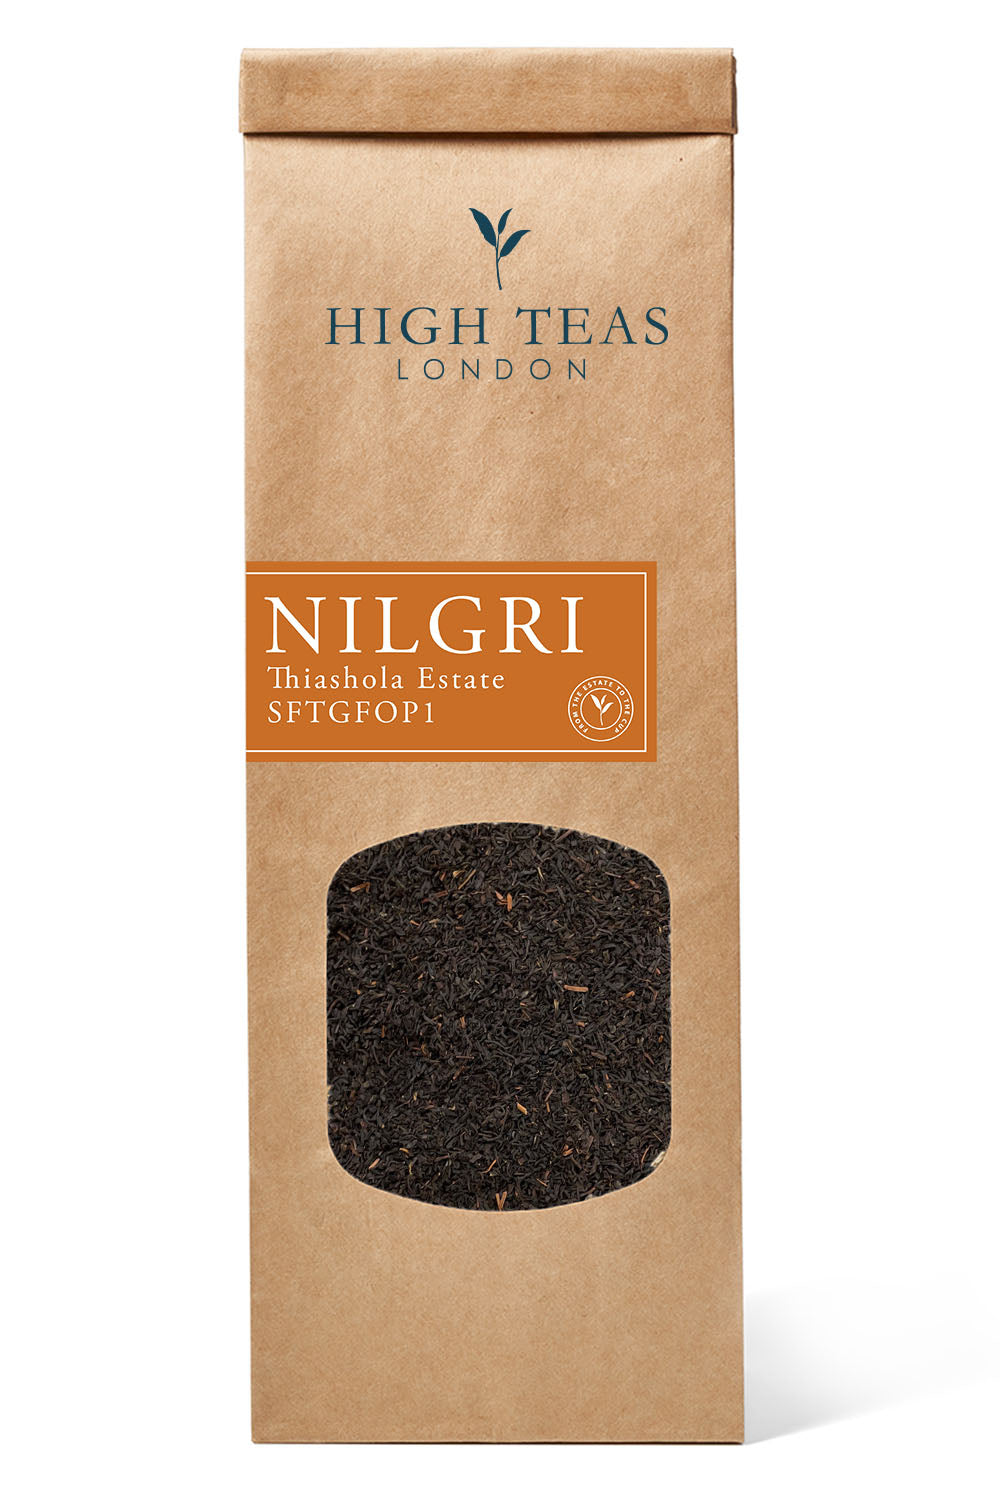 Nilgiri - Bio SFTGFOP1 Thiashola Estate-50g-Loose Leaf Tea-High Teas